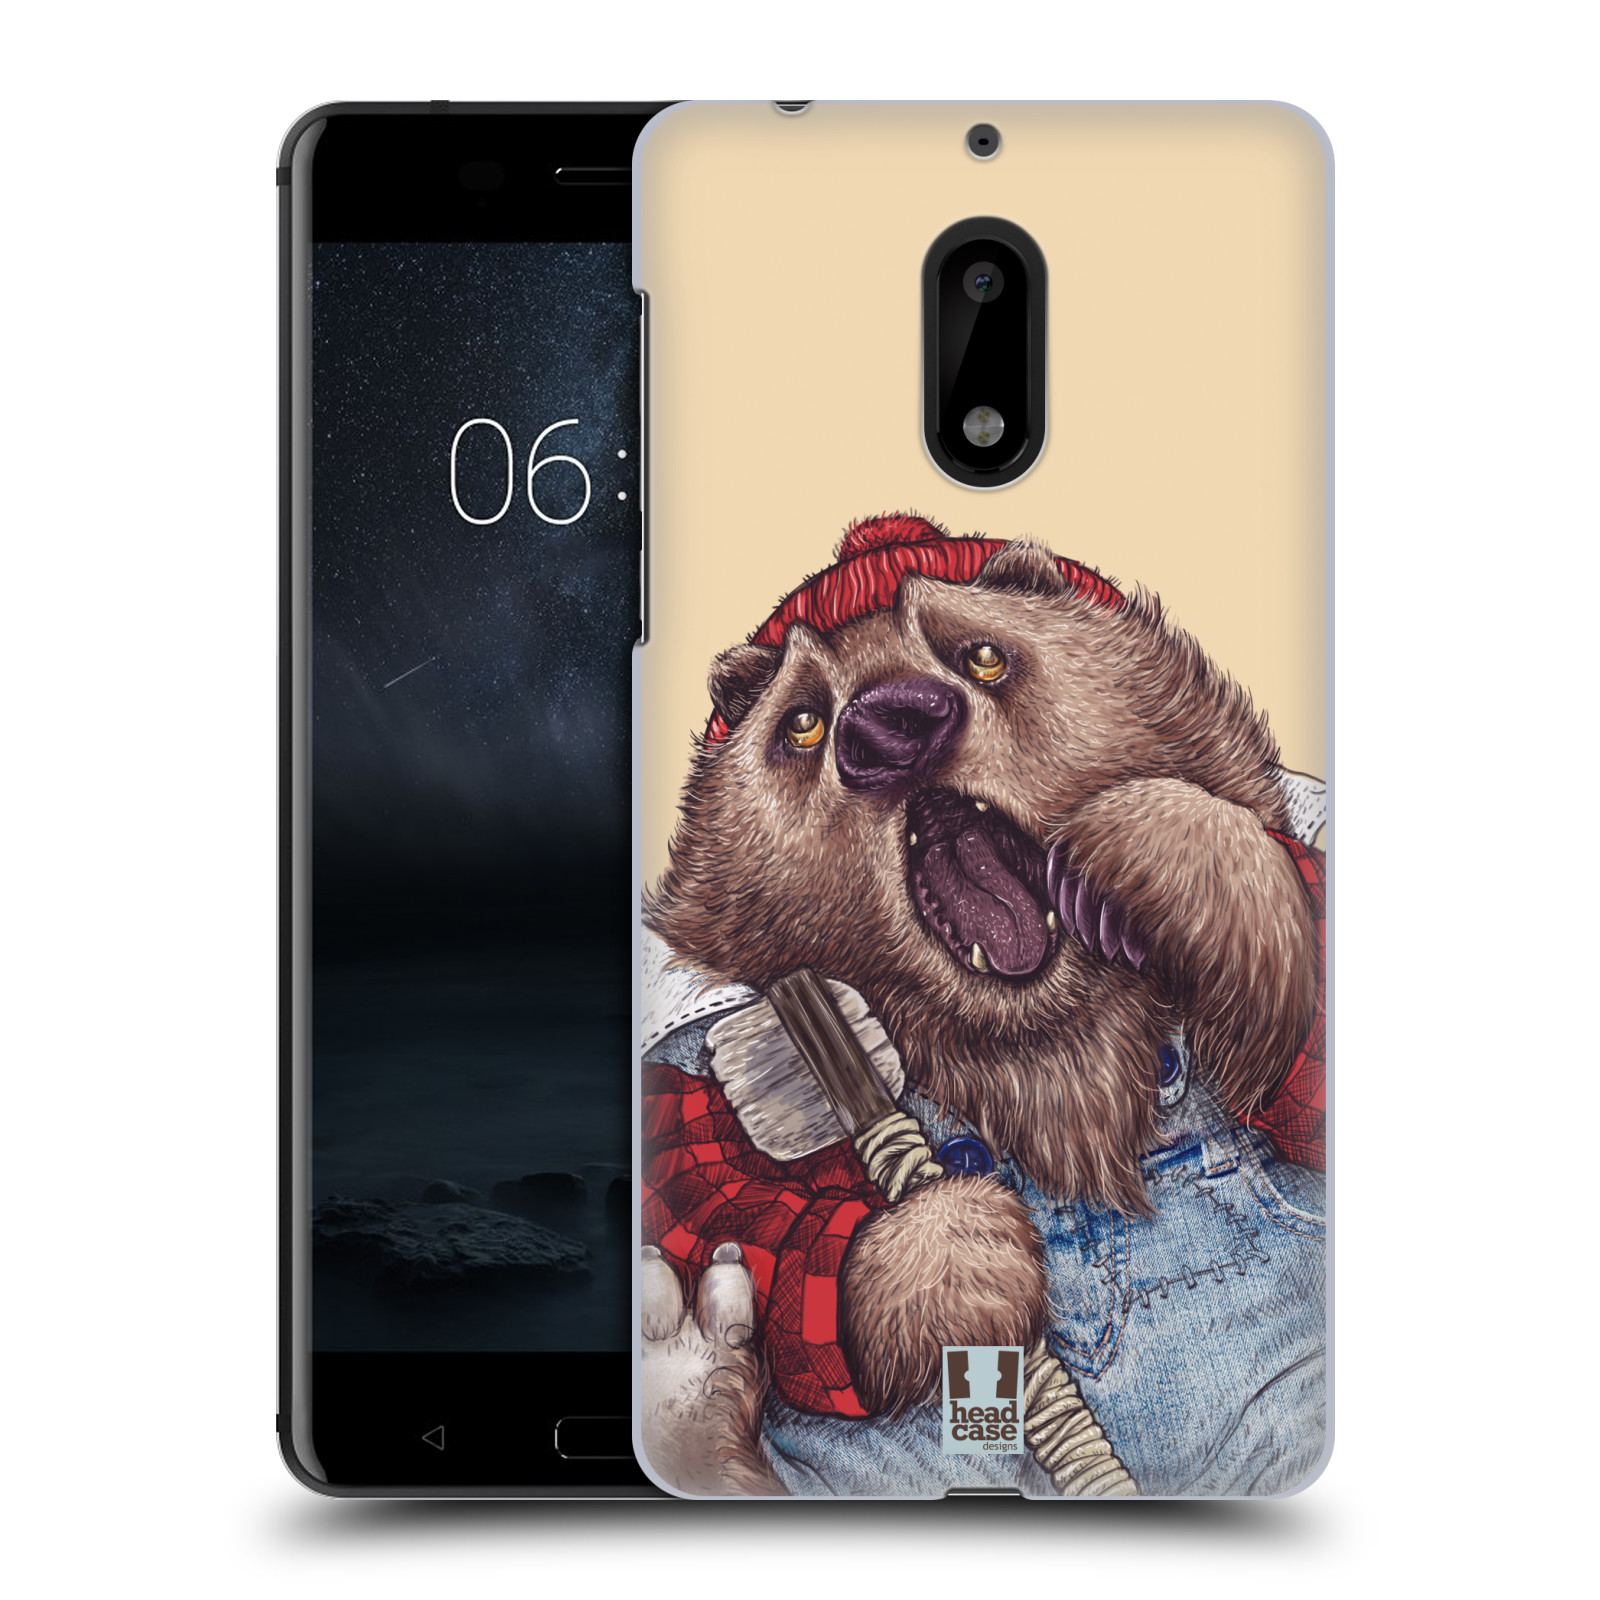 HEAD CASE plastový obal na mobil Nokia 6 vzor Kreslená zvířátka medvěd